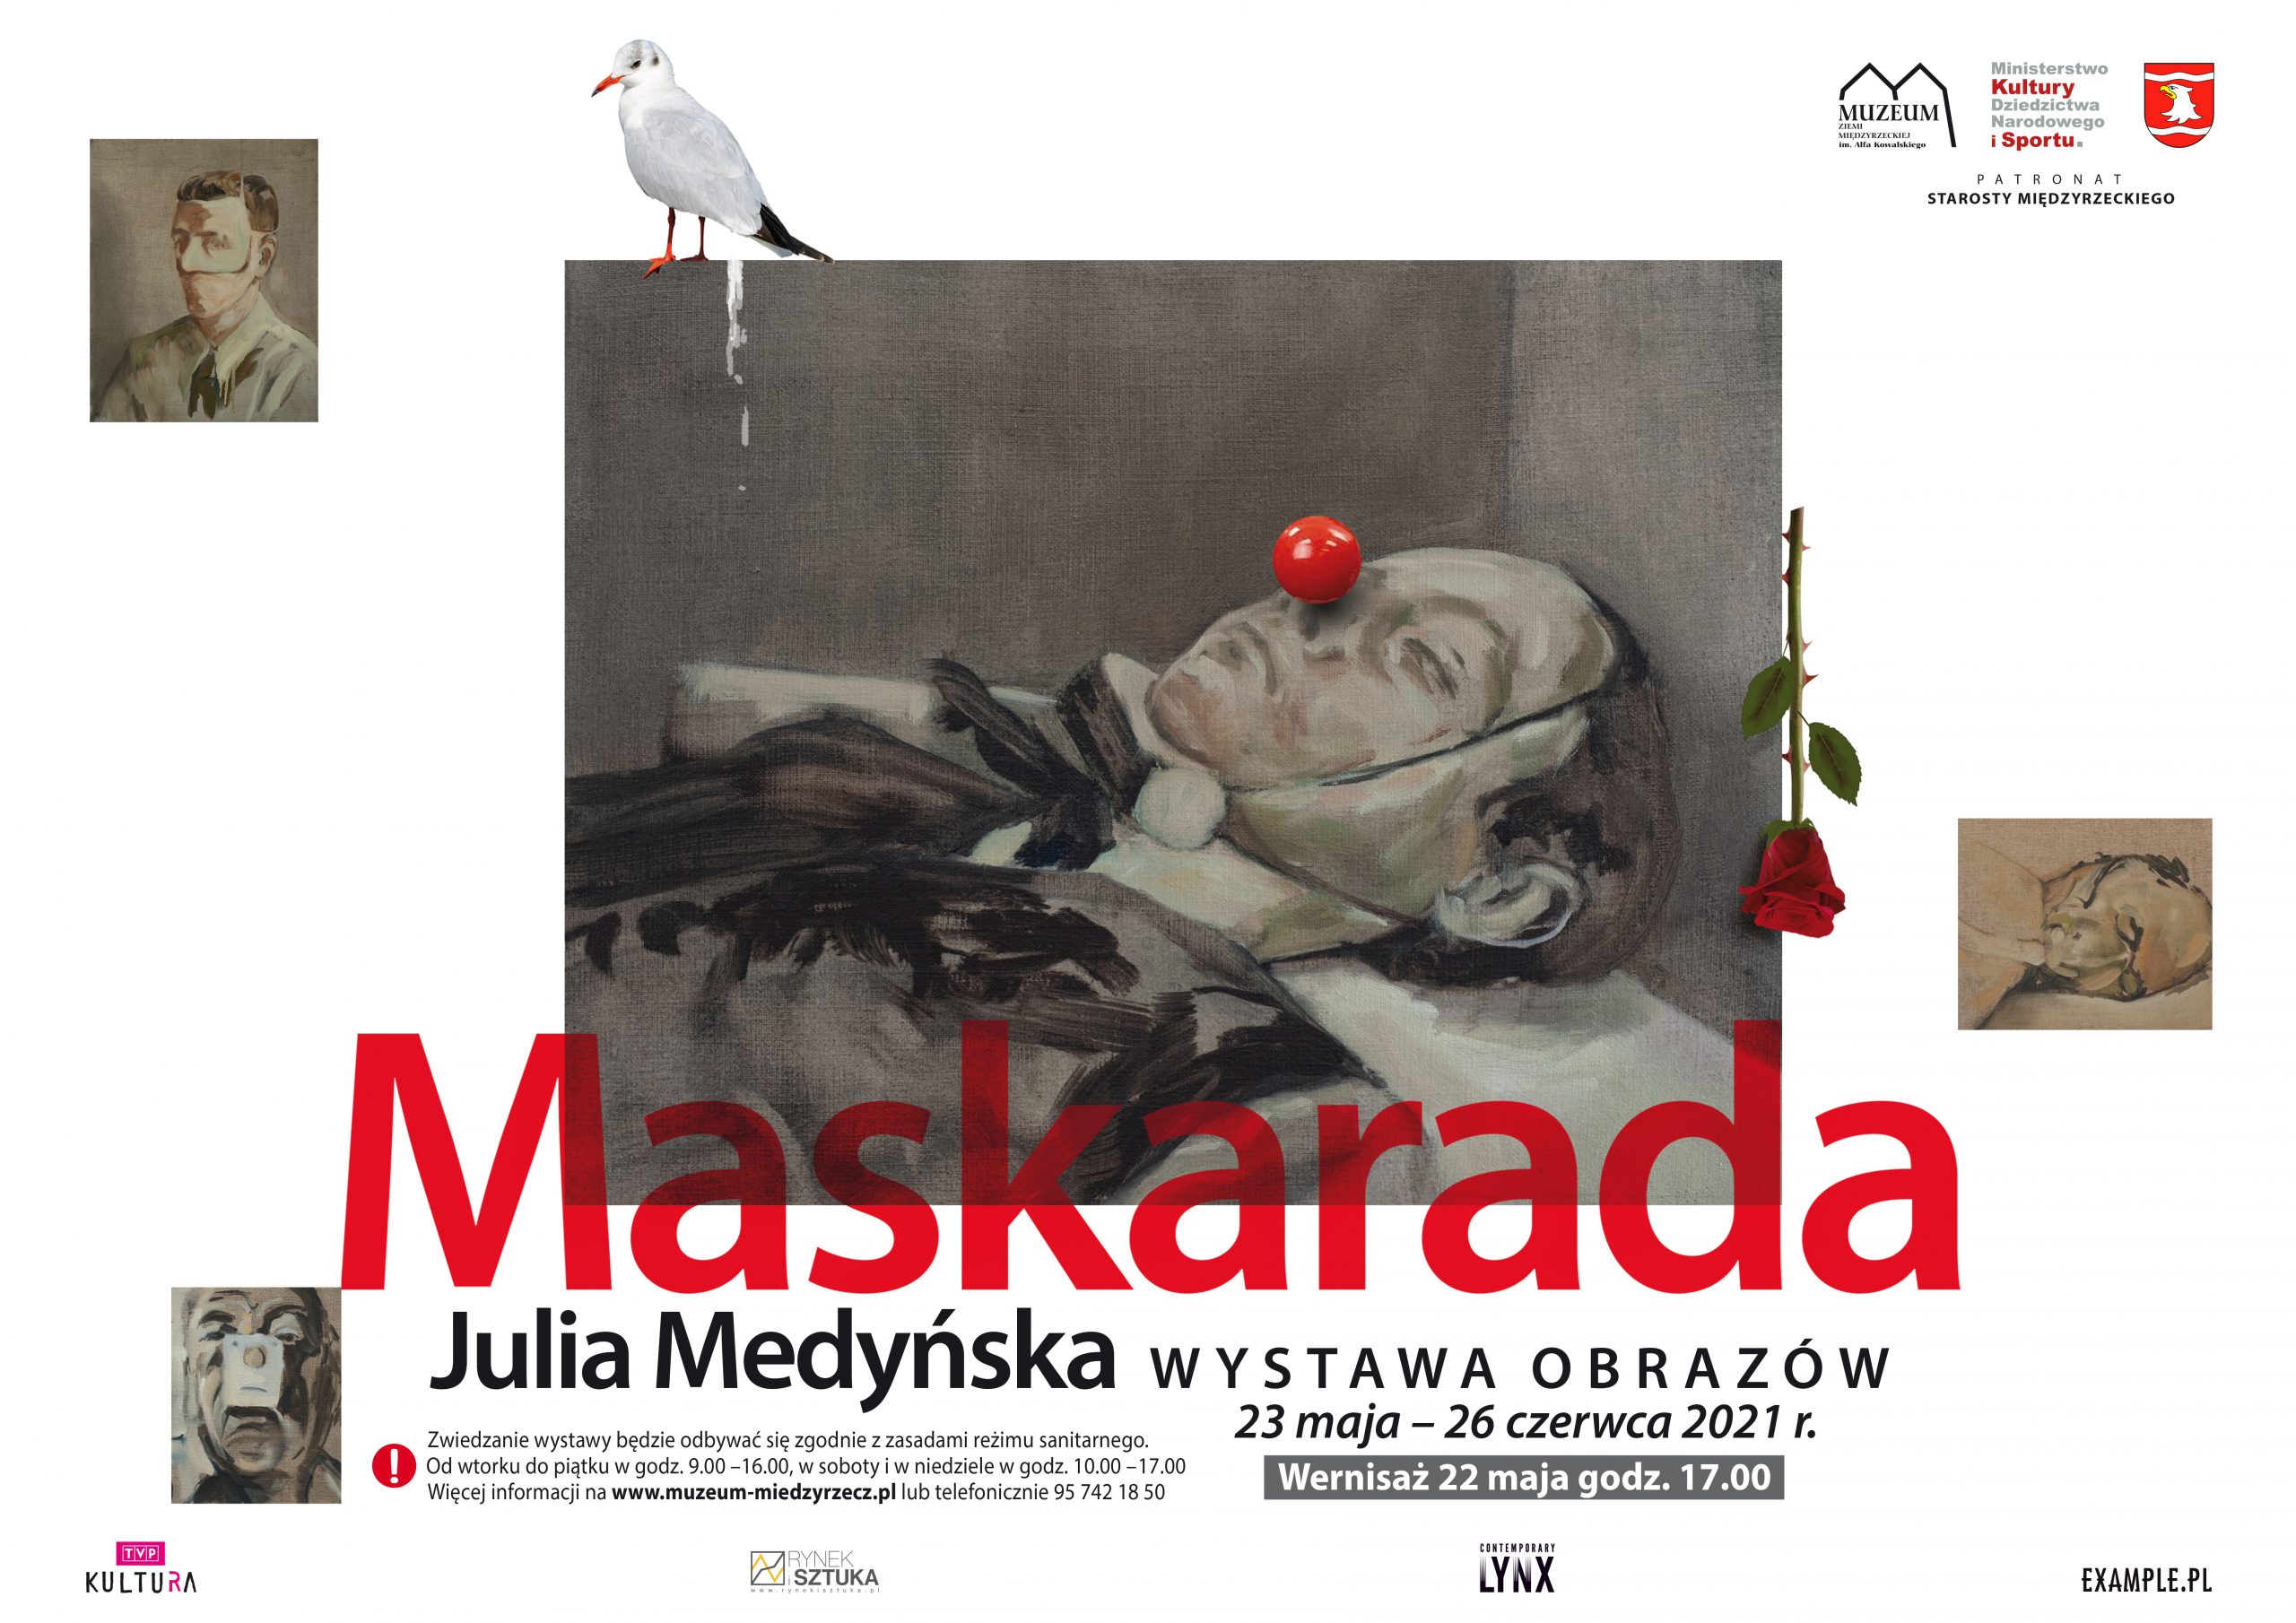 Maskarada Julia Medynska wystawa